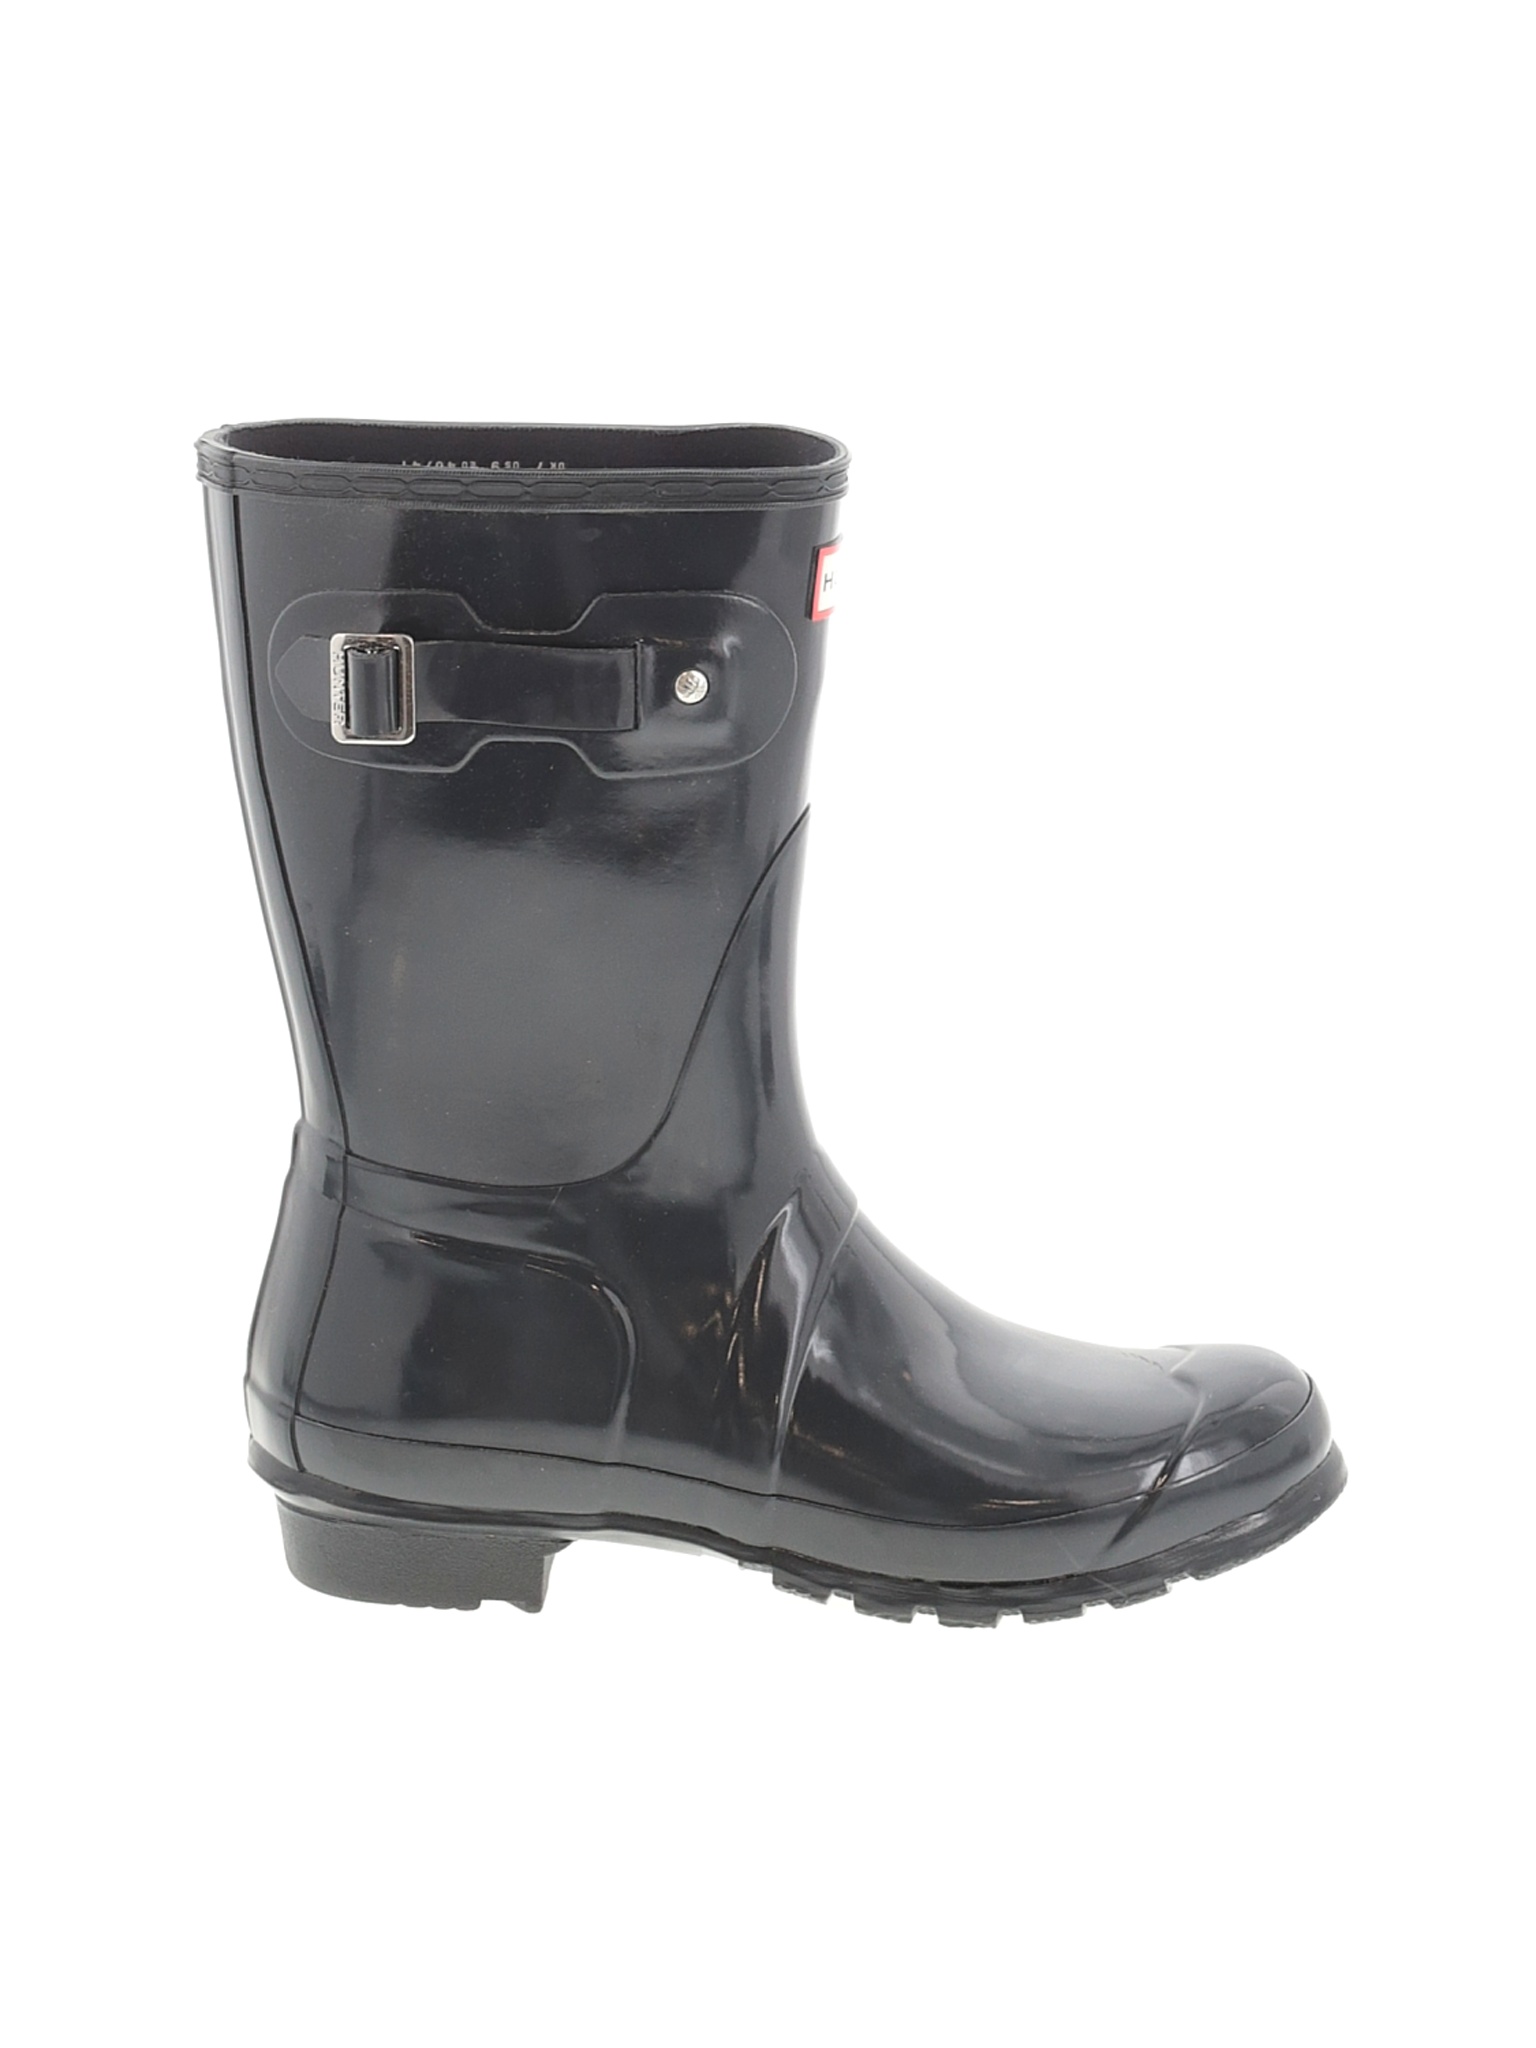 rain boots women size 9